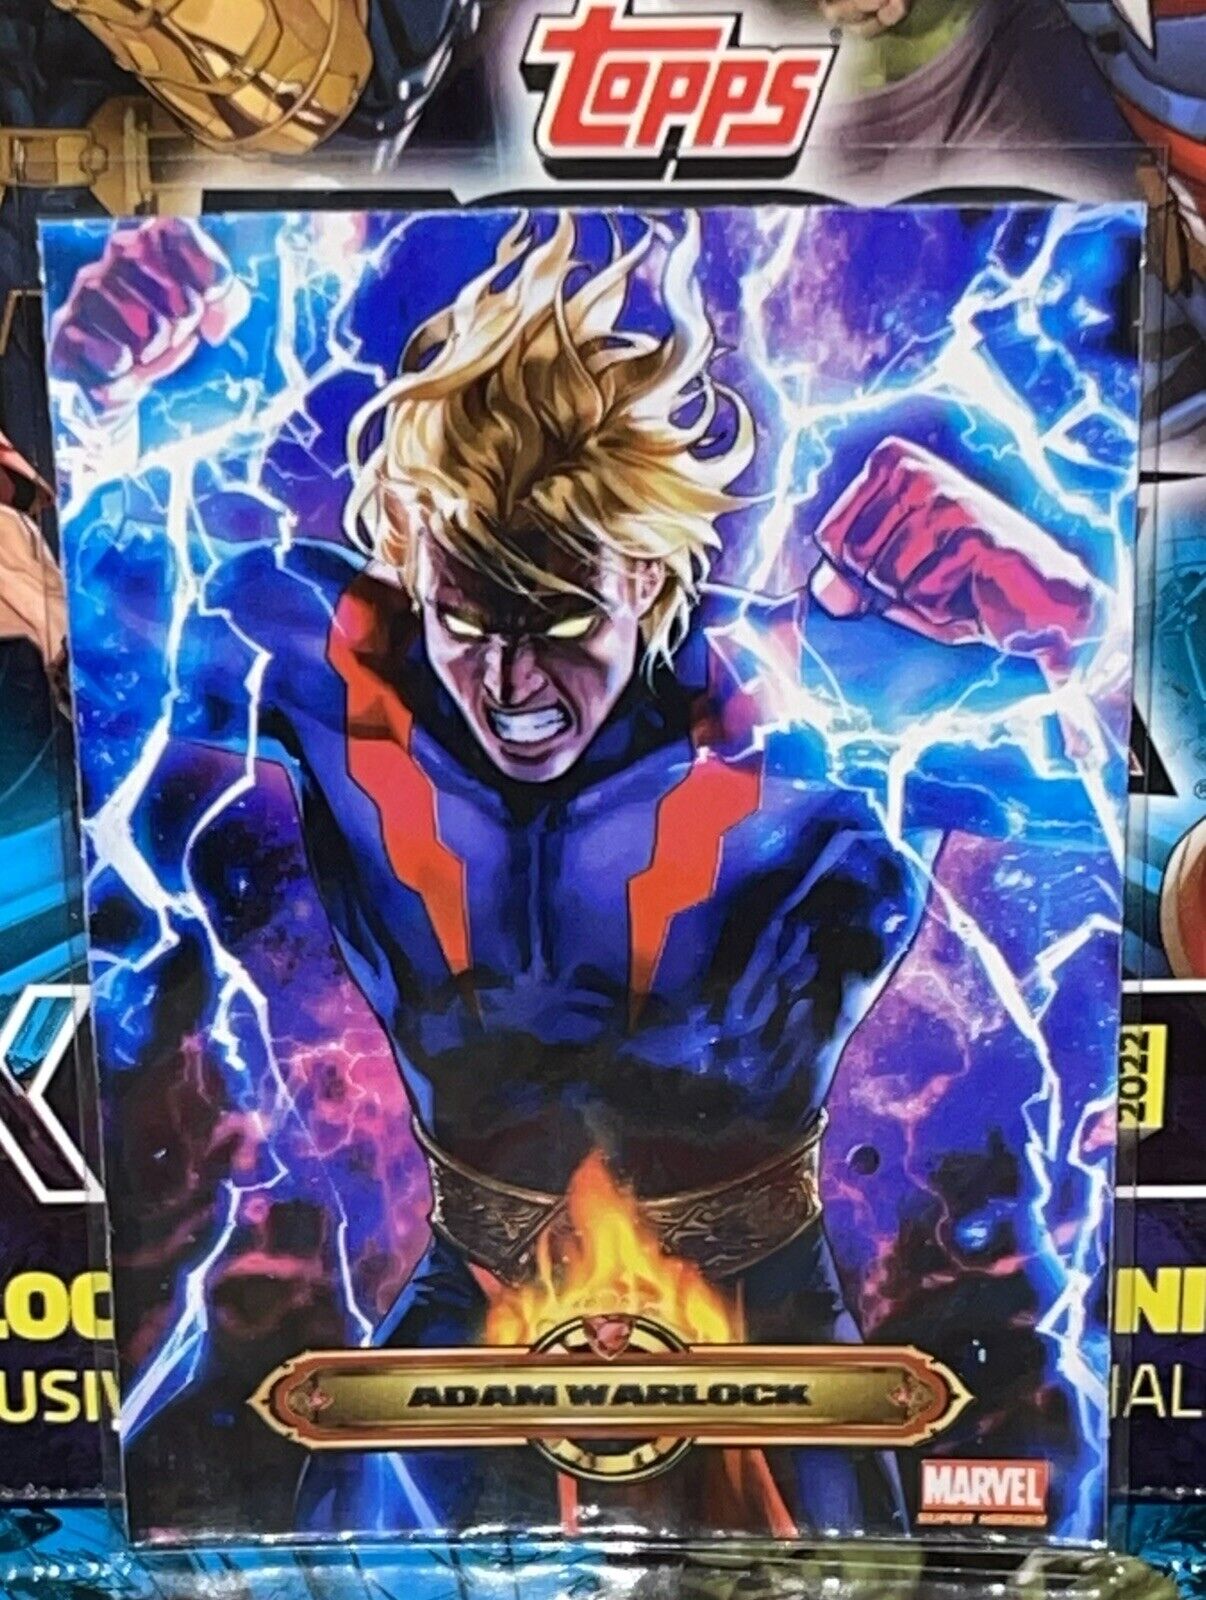 2019 MARVEL SUPER HEROS RARE FOREIGN CARD ADAM WARLOCK #51